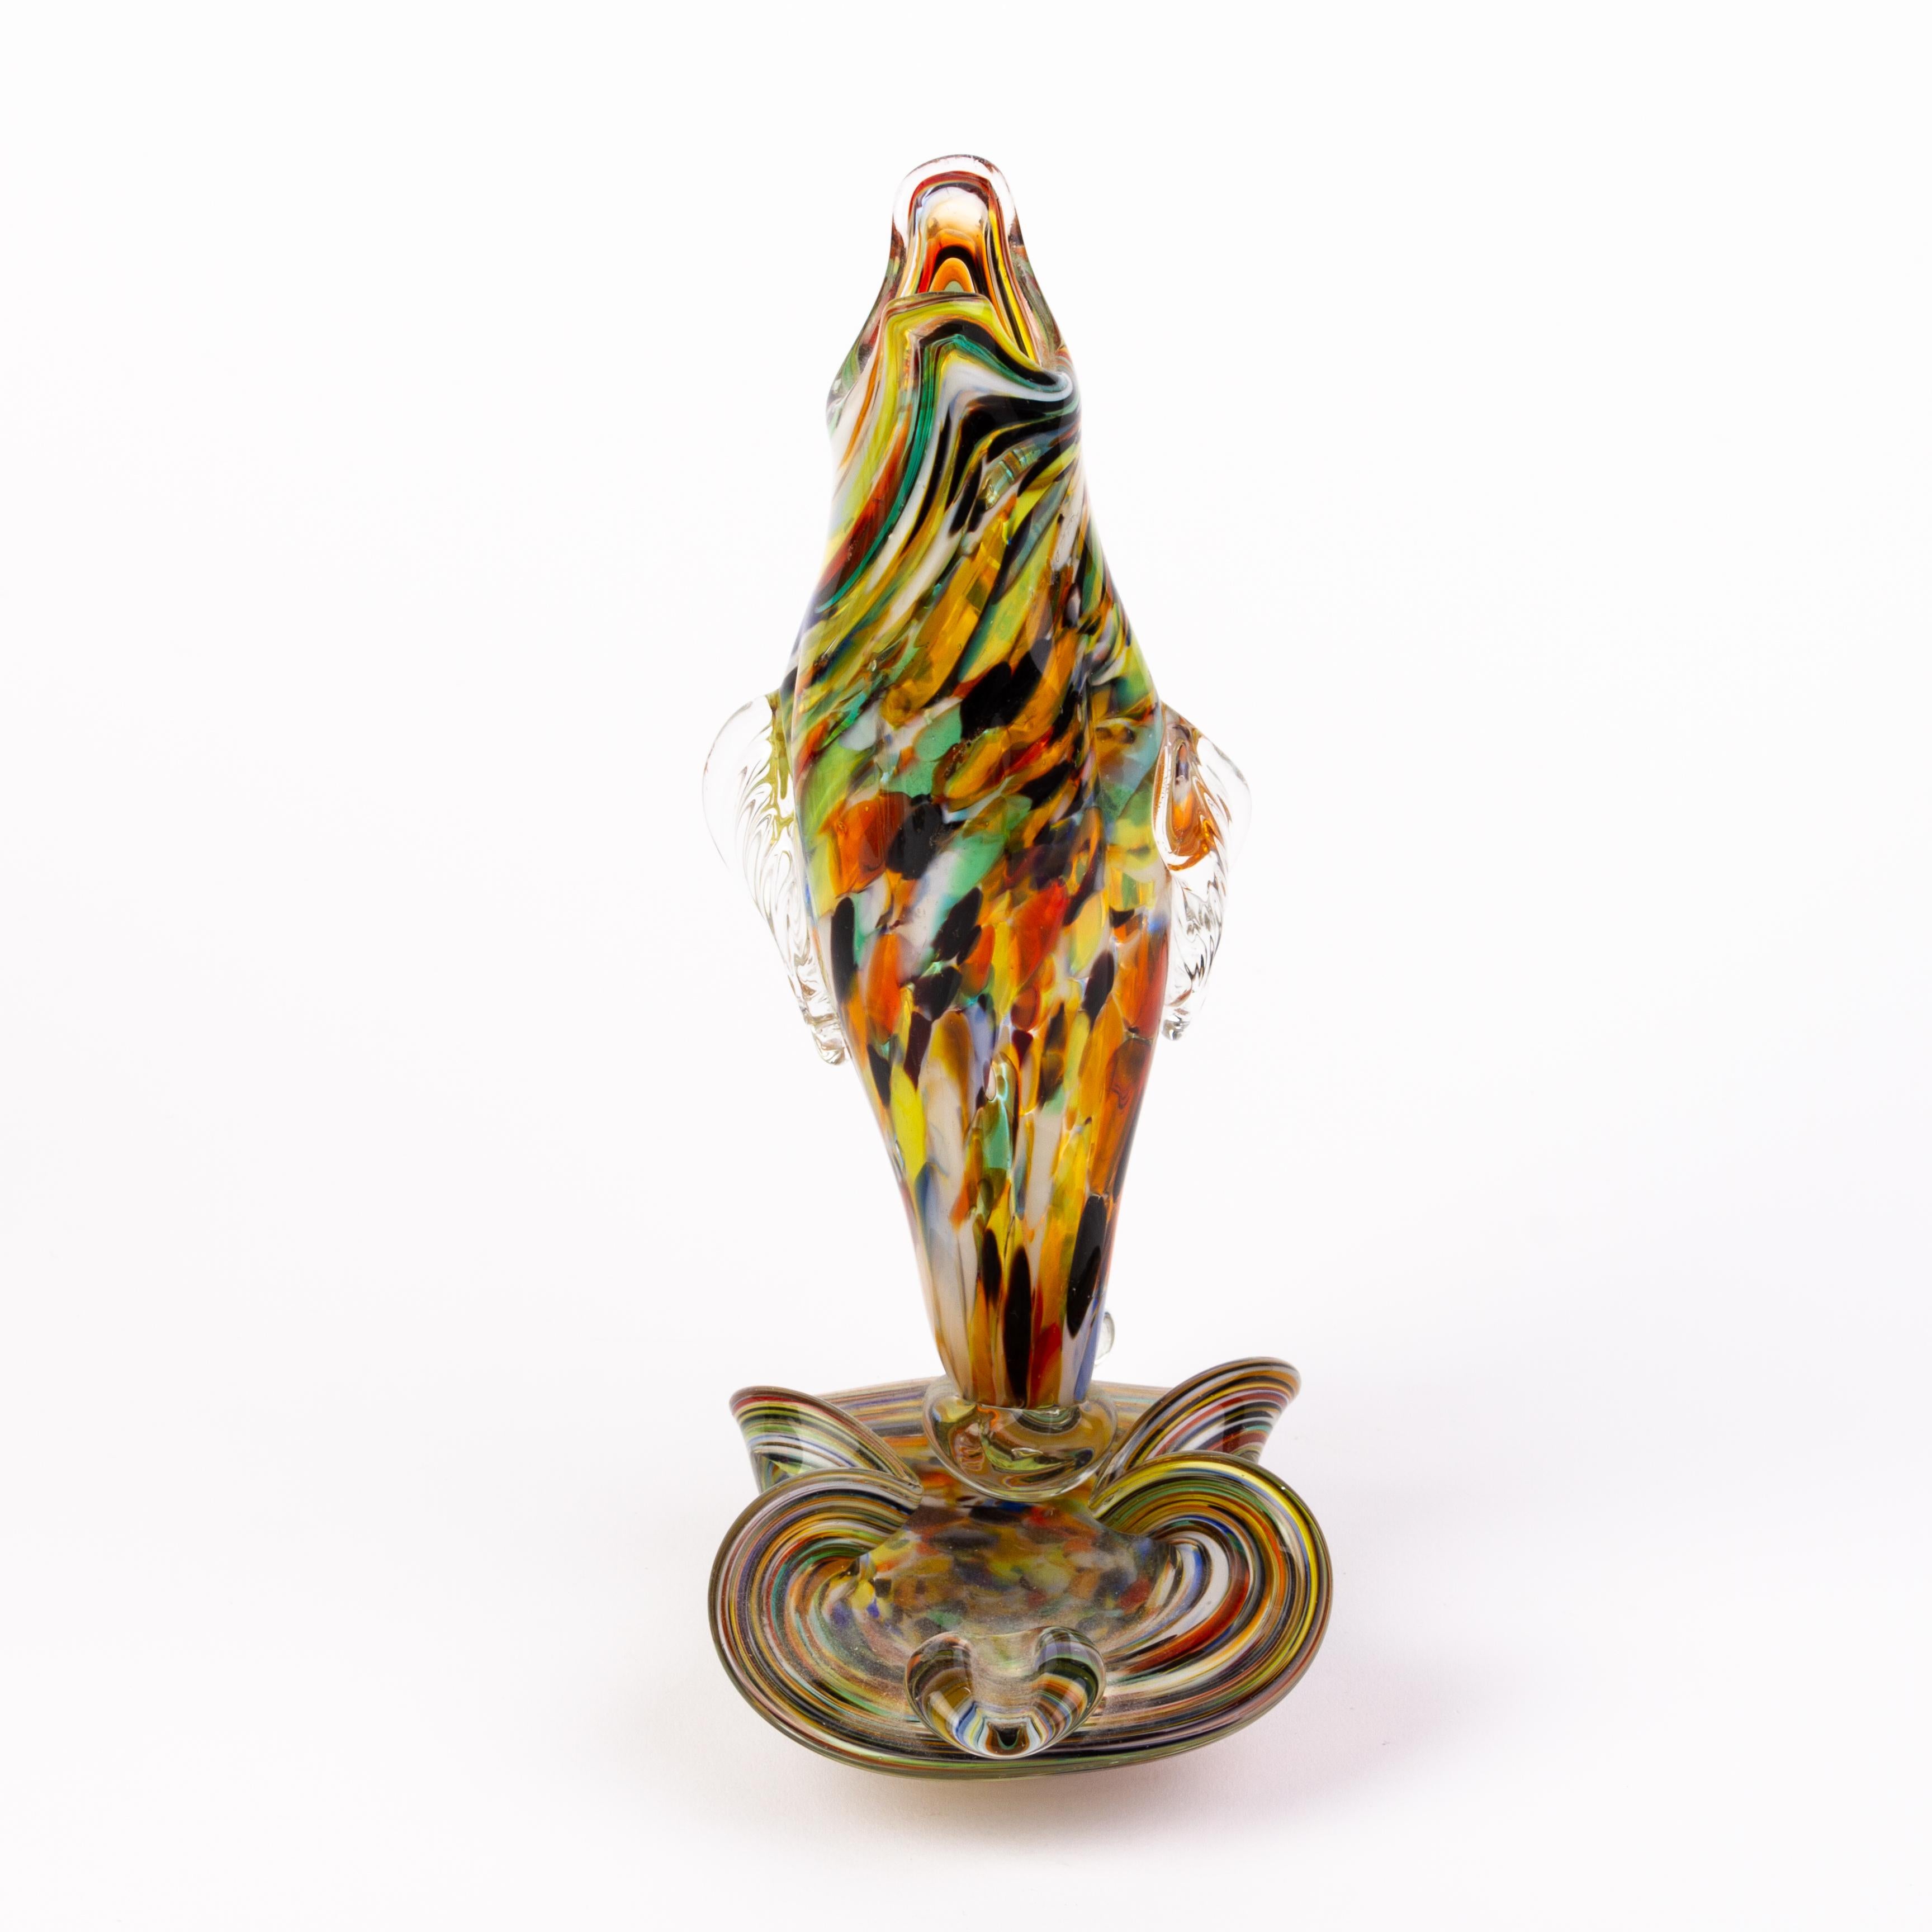 Murano Venetian Glass Sculpture Fish Vase 
Good condition
Free international shipping.